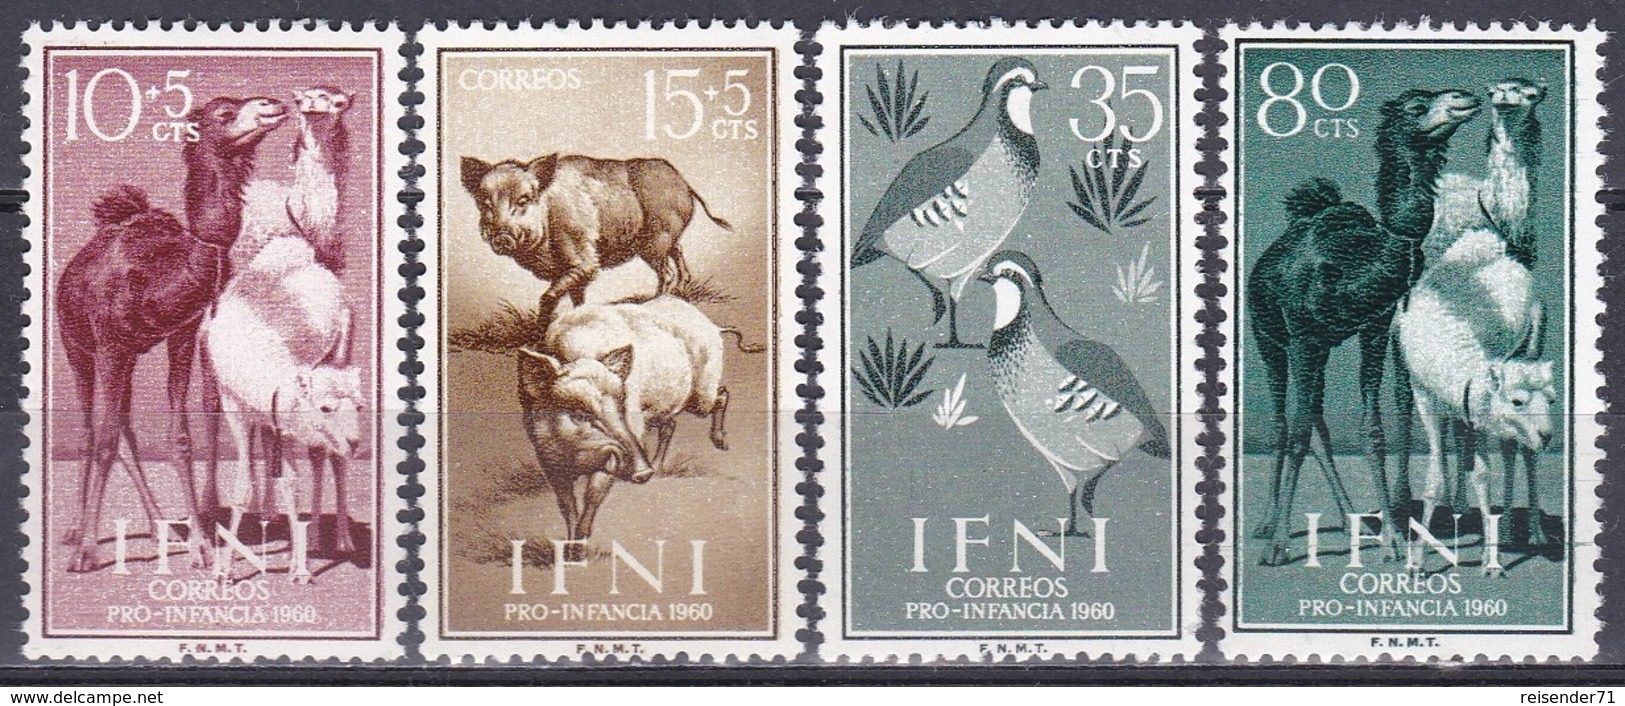 Spanien Espana Ifni 1960 Tiere Fauna Animals Kamele Camels Wildschweine Boars Hühner Fowls, Mi. 188-1 ** - Ifni